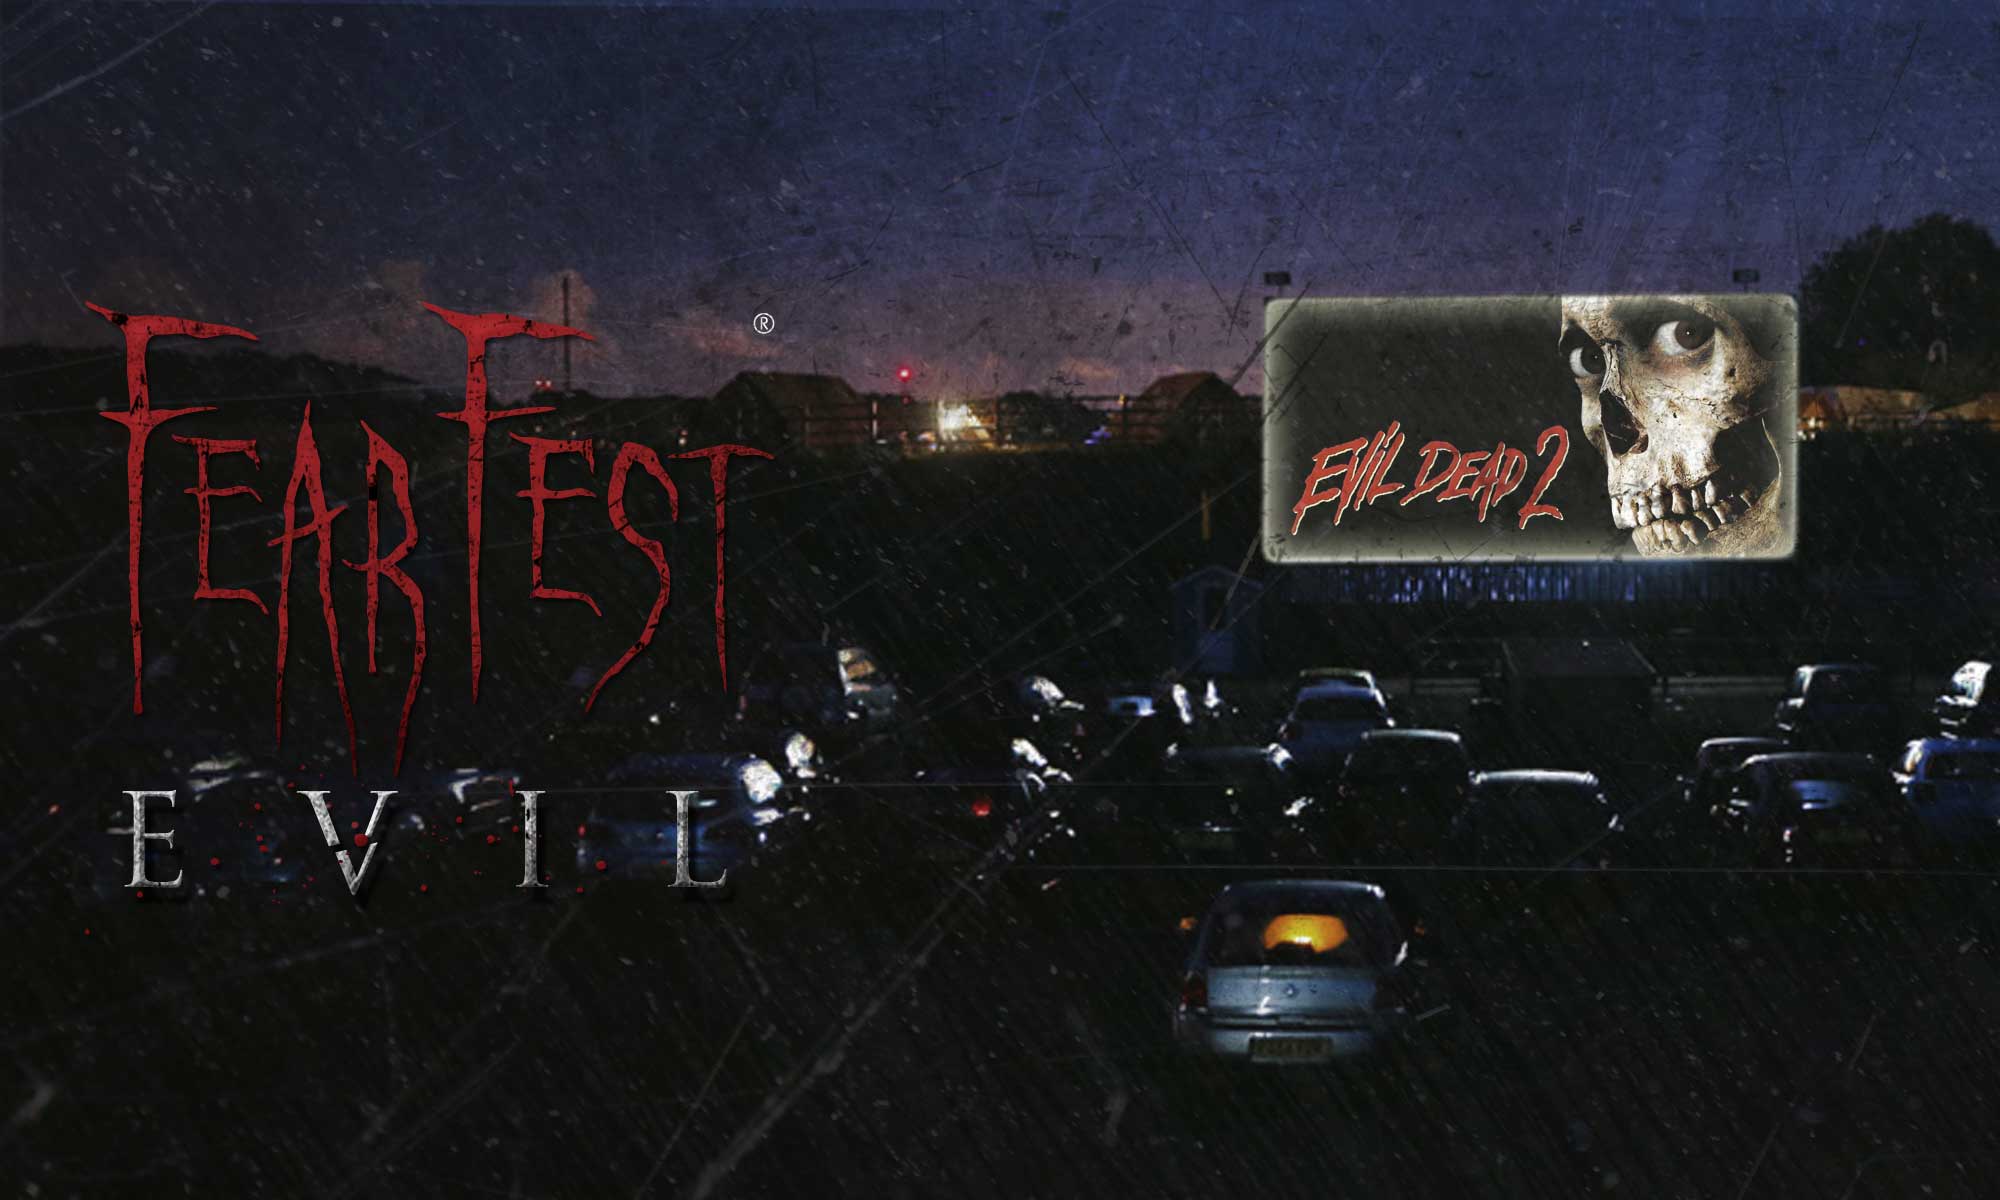 Evil Dead 2 Free Drive-In Cinema Screening at FearFest-Evil September 2019